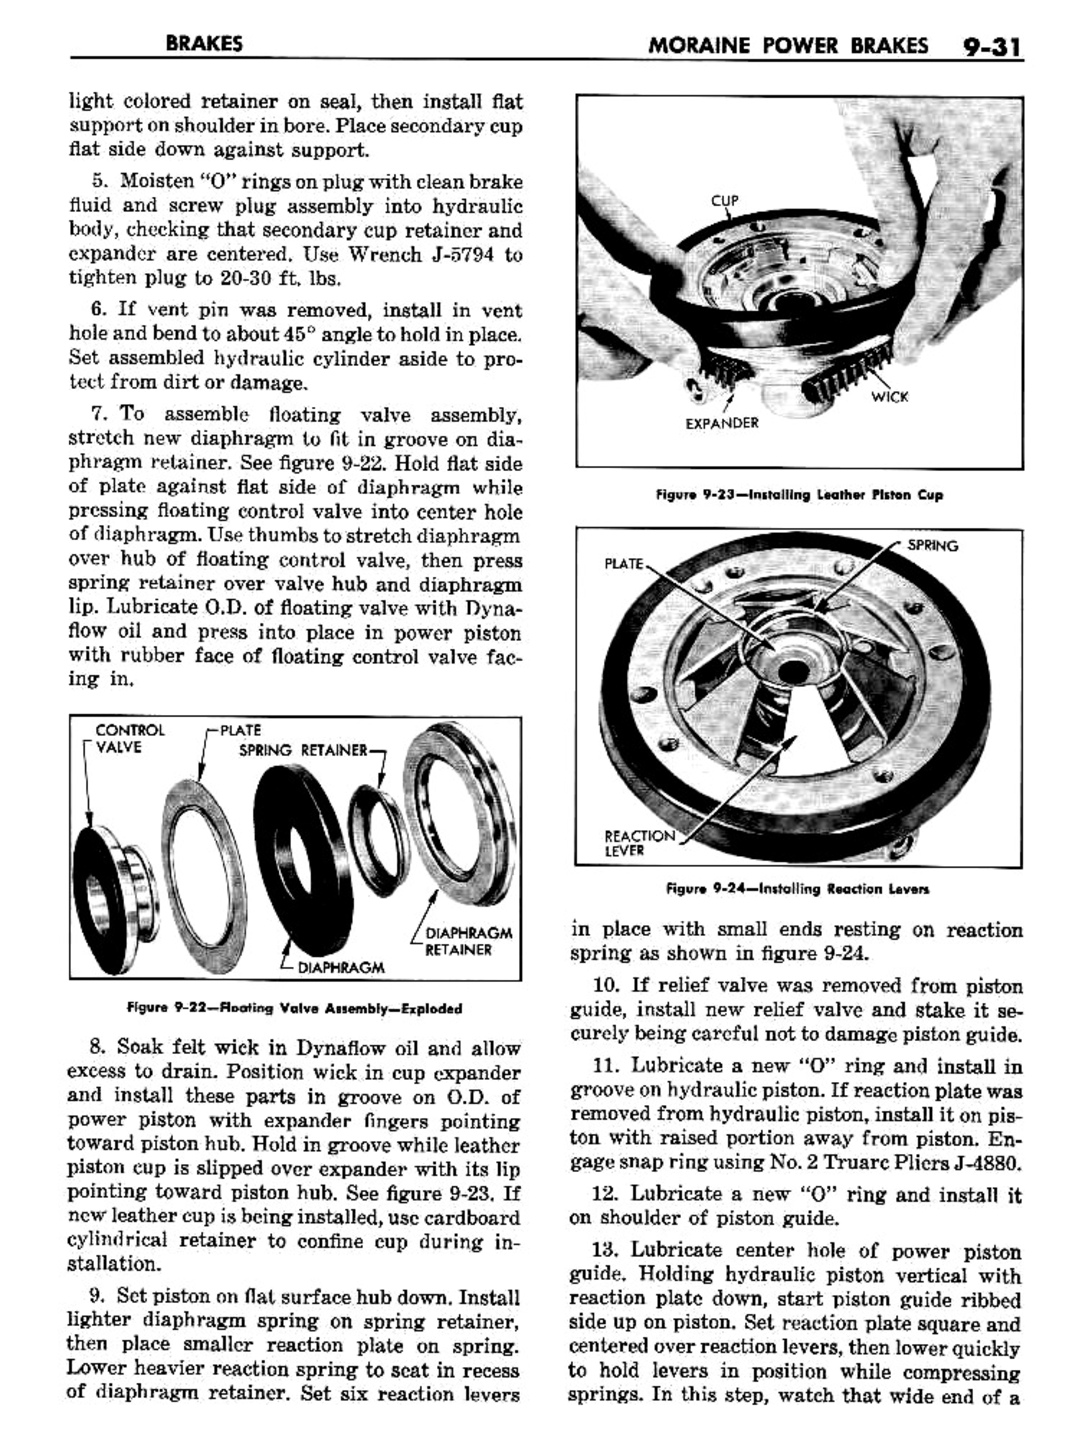 n_10 1957 Buick Shop Manual - Brakes-031-031.jpg